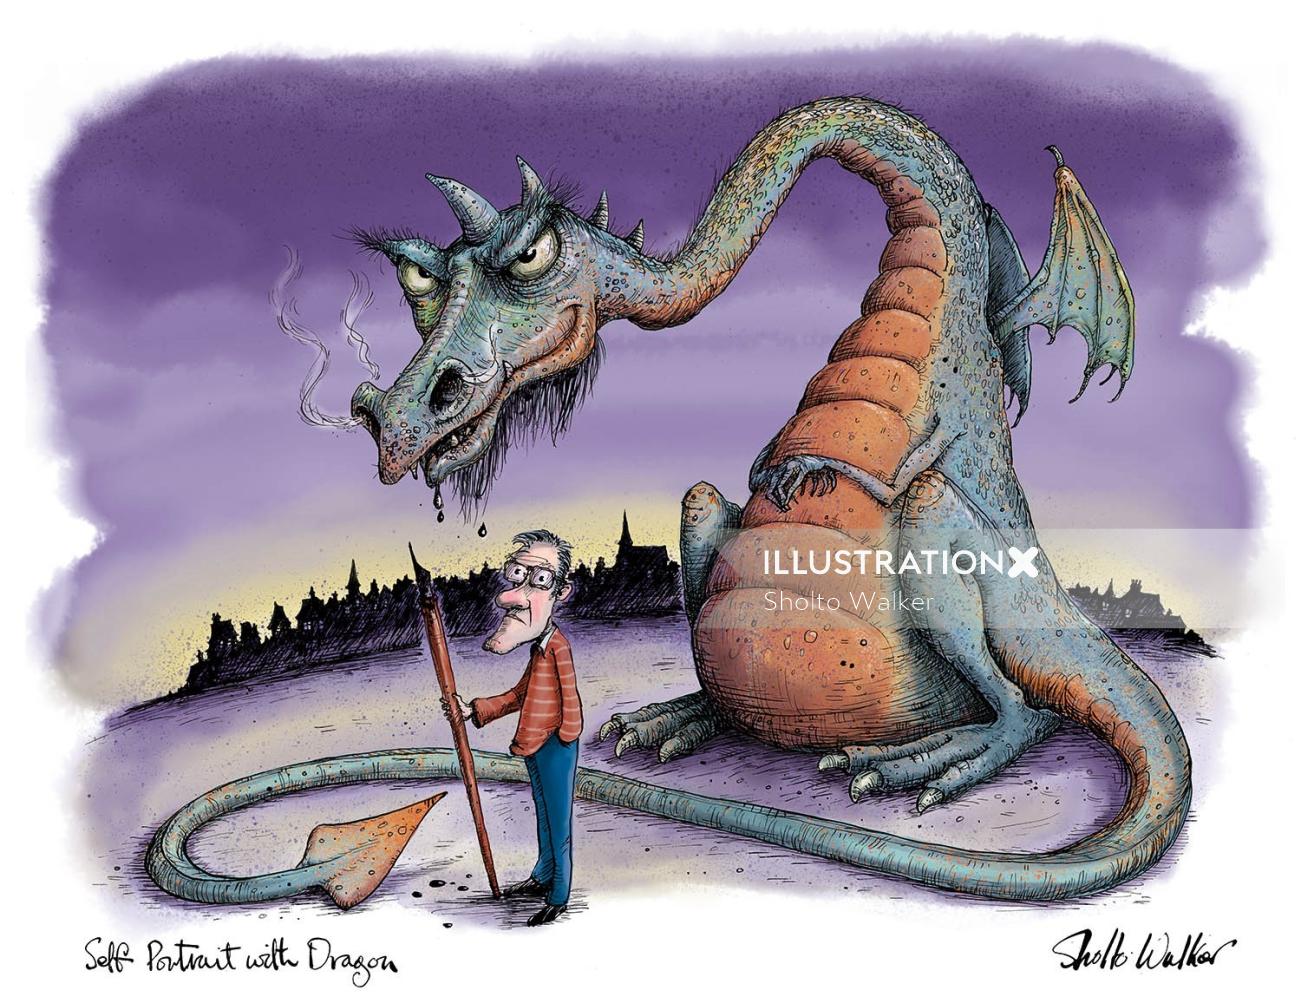 Illustration for a dragon